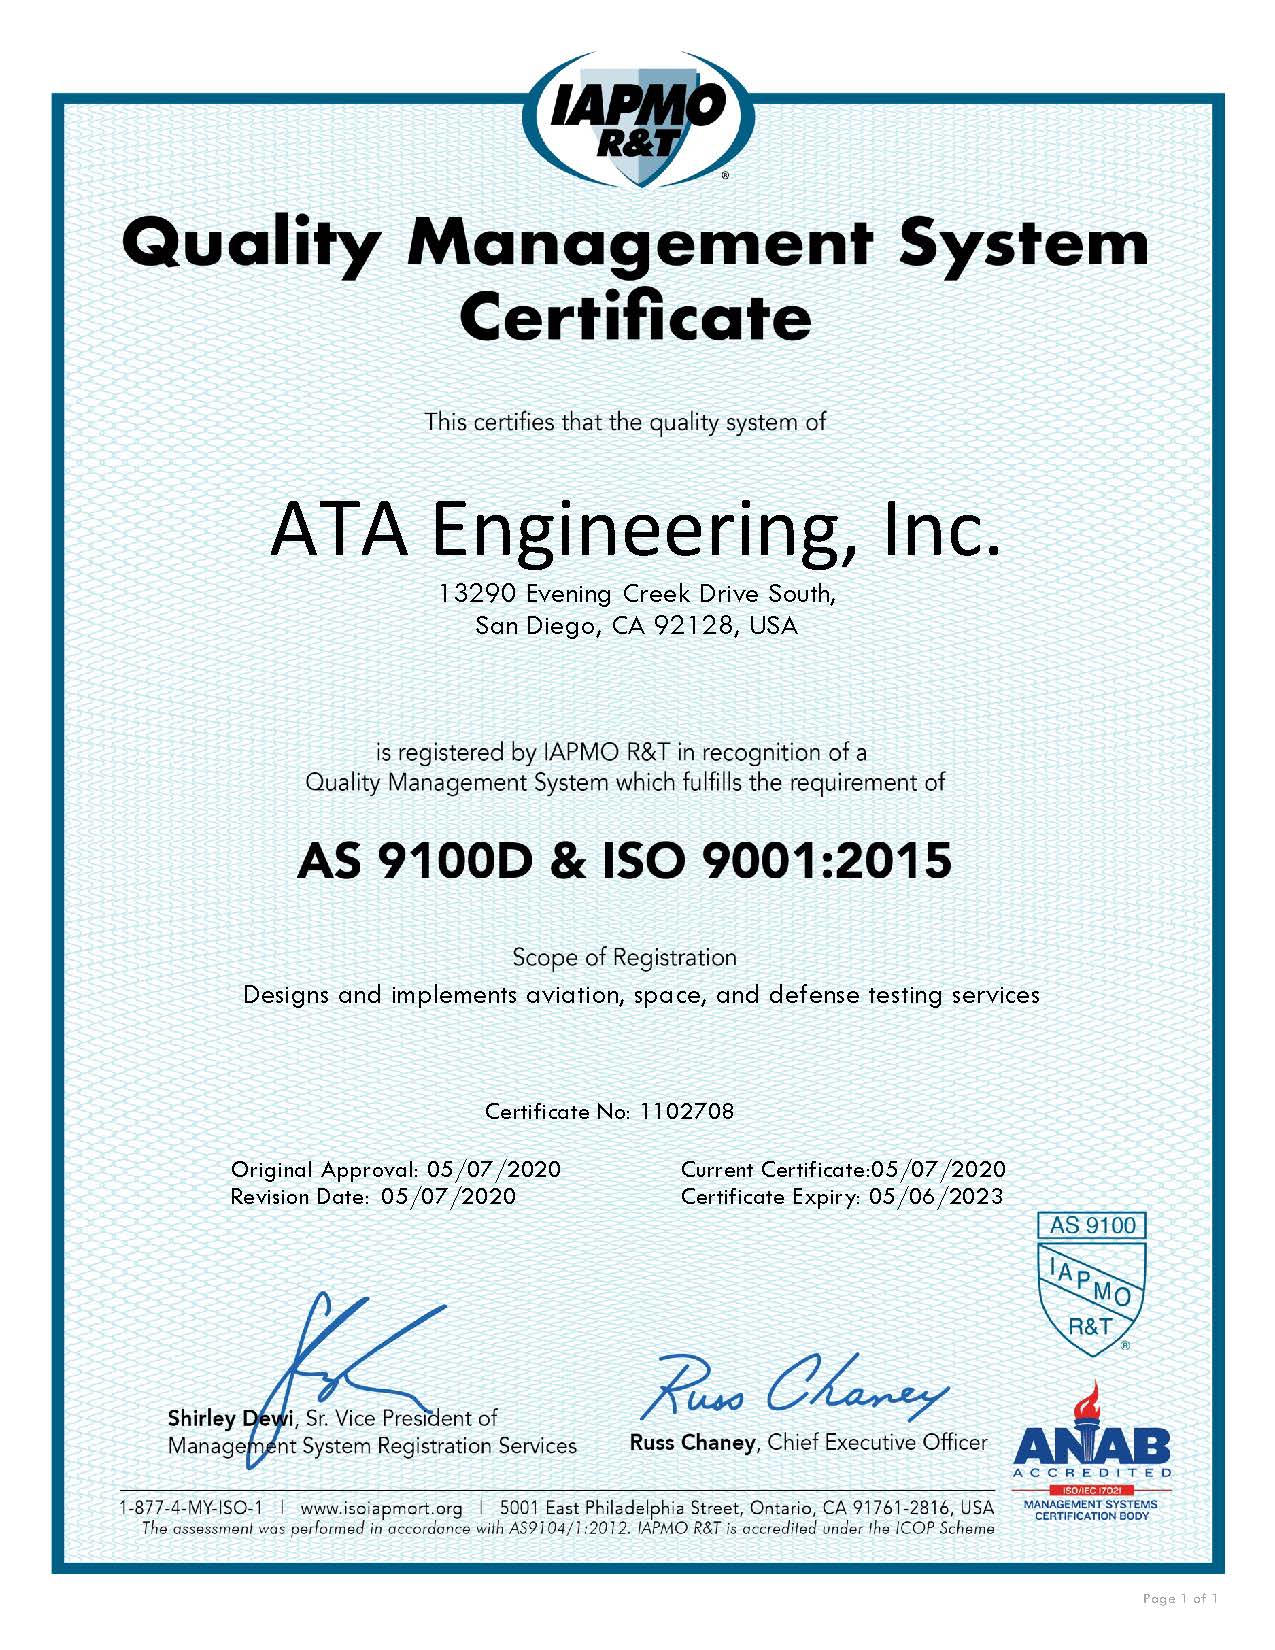 Quality ATA Engineering